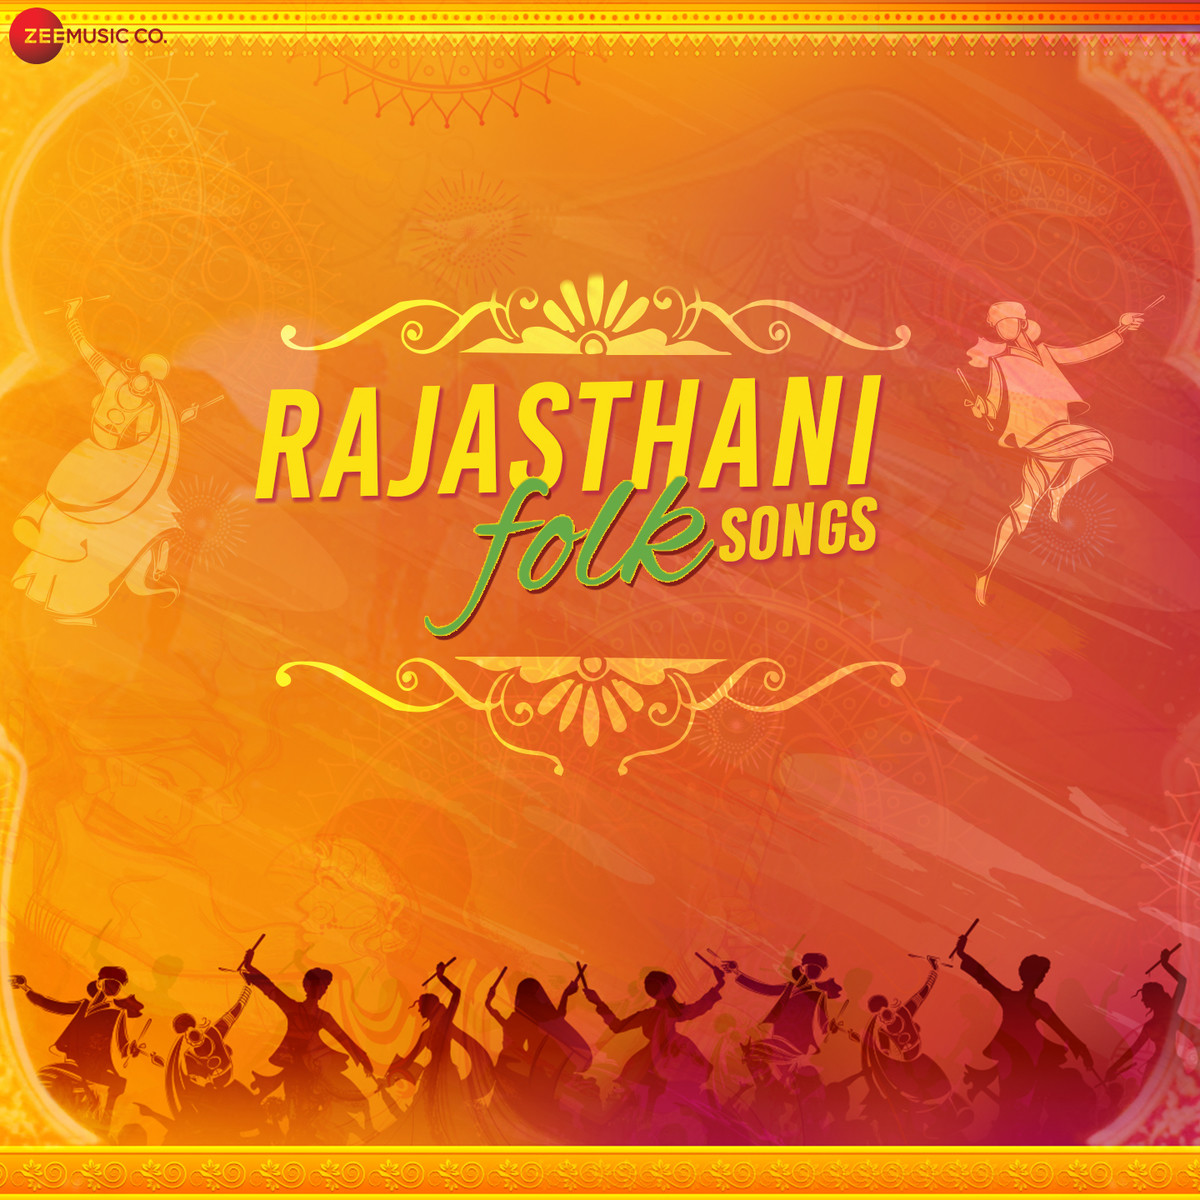 Ghoomar Lyrics In Rajasthani Rajasthani Folk Songs Ghoomar Song Lyrics In English Free Online On Gaana Com Home haryanvi lyrics punjabi lyrics rajasthani lyrics bollywood lyrics ☰. ghoomar lyrics in rajasthani